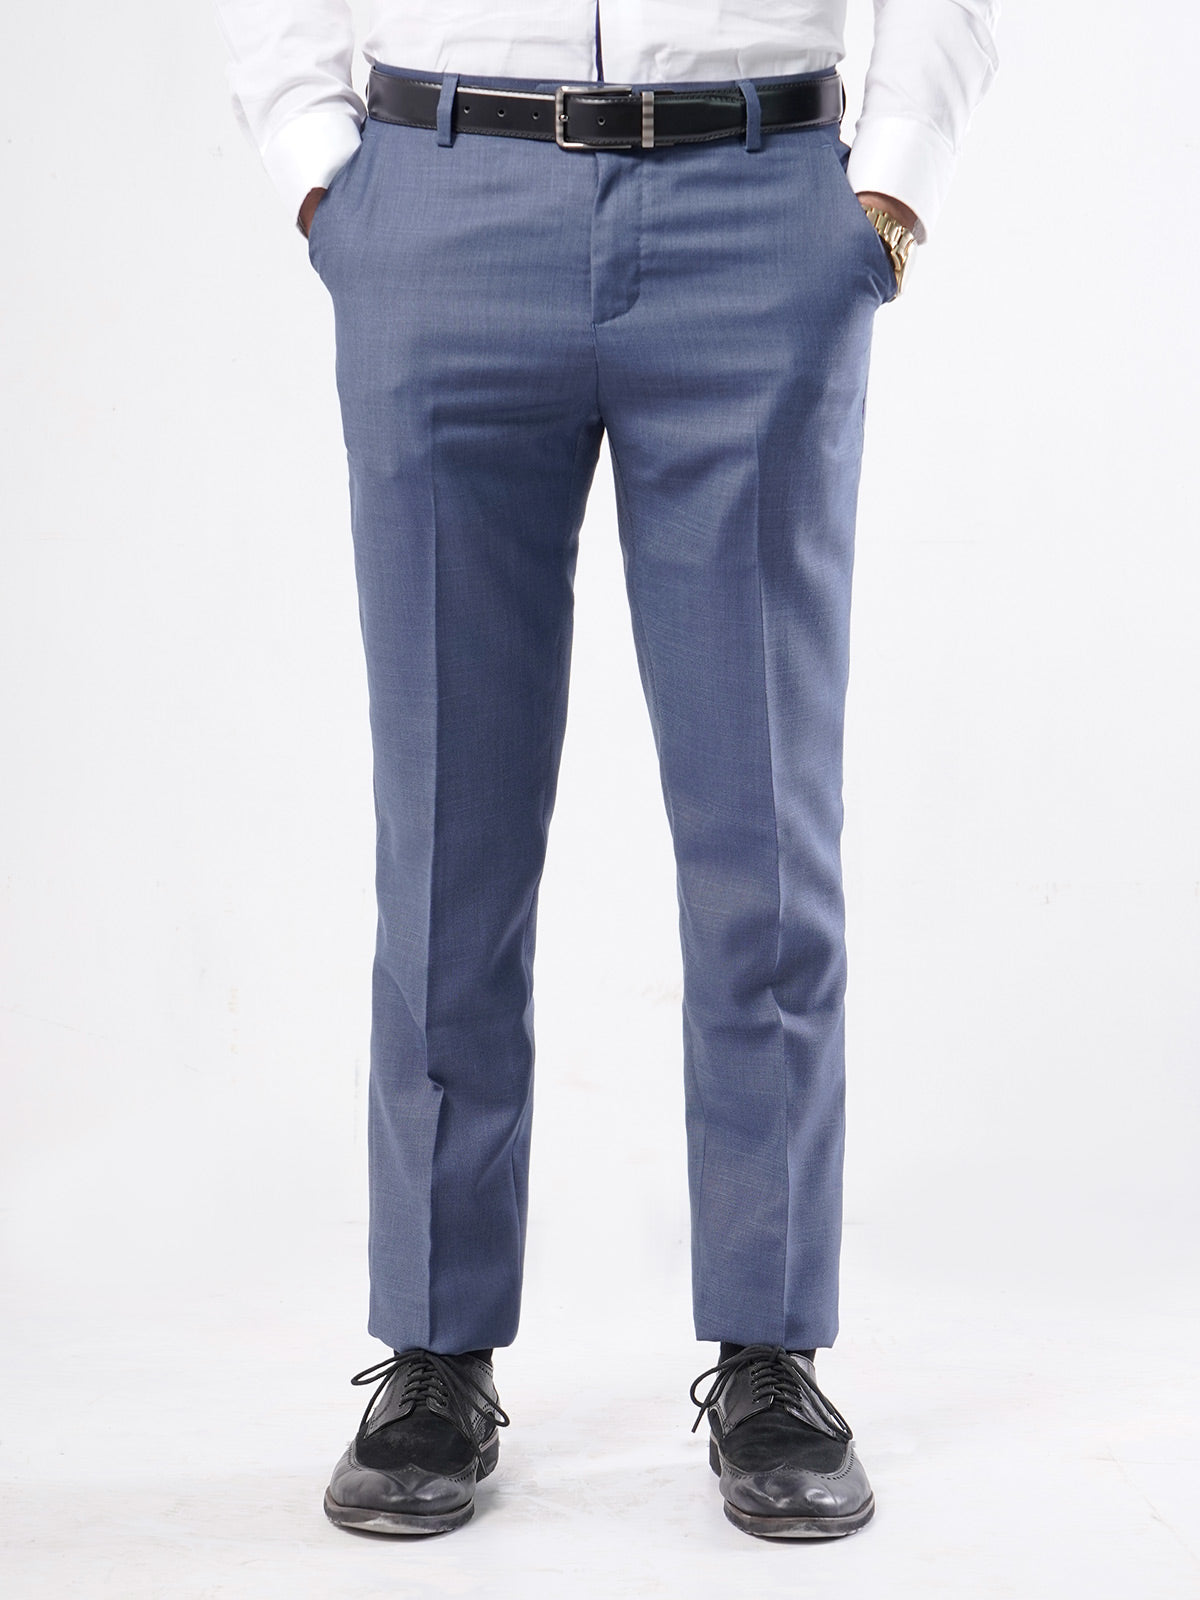 Blue Self Executive Formal Dress Trouser (FDT-132)